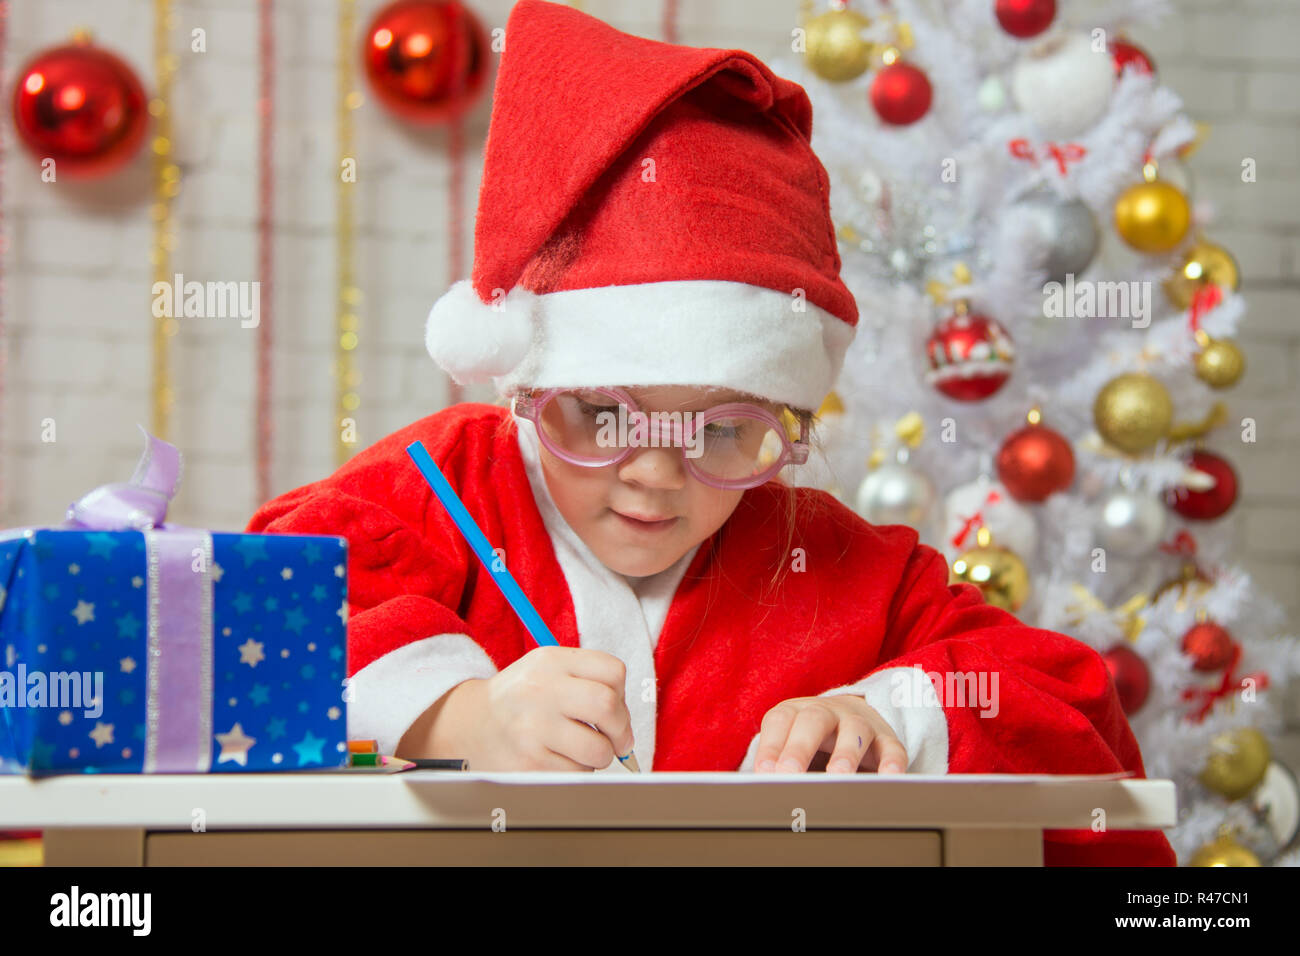 La ragazza si prepara con entusiasmo una carta regalo per Natale Foto Stock